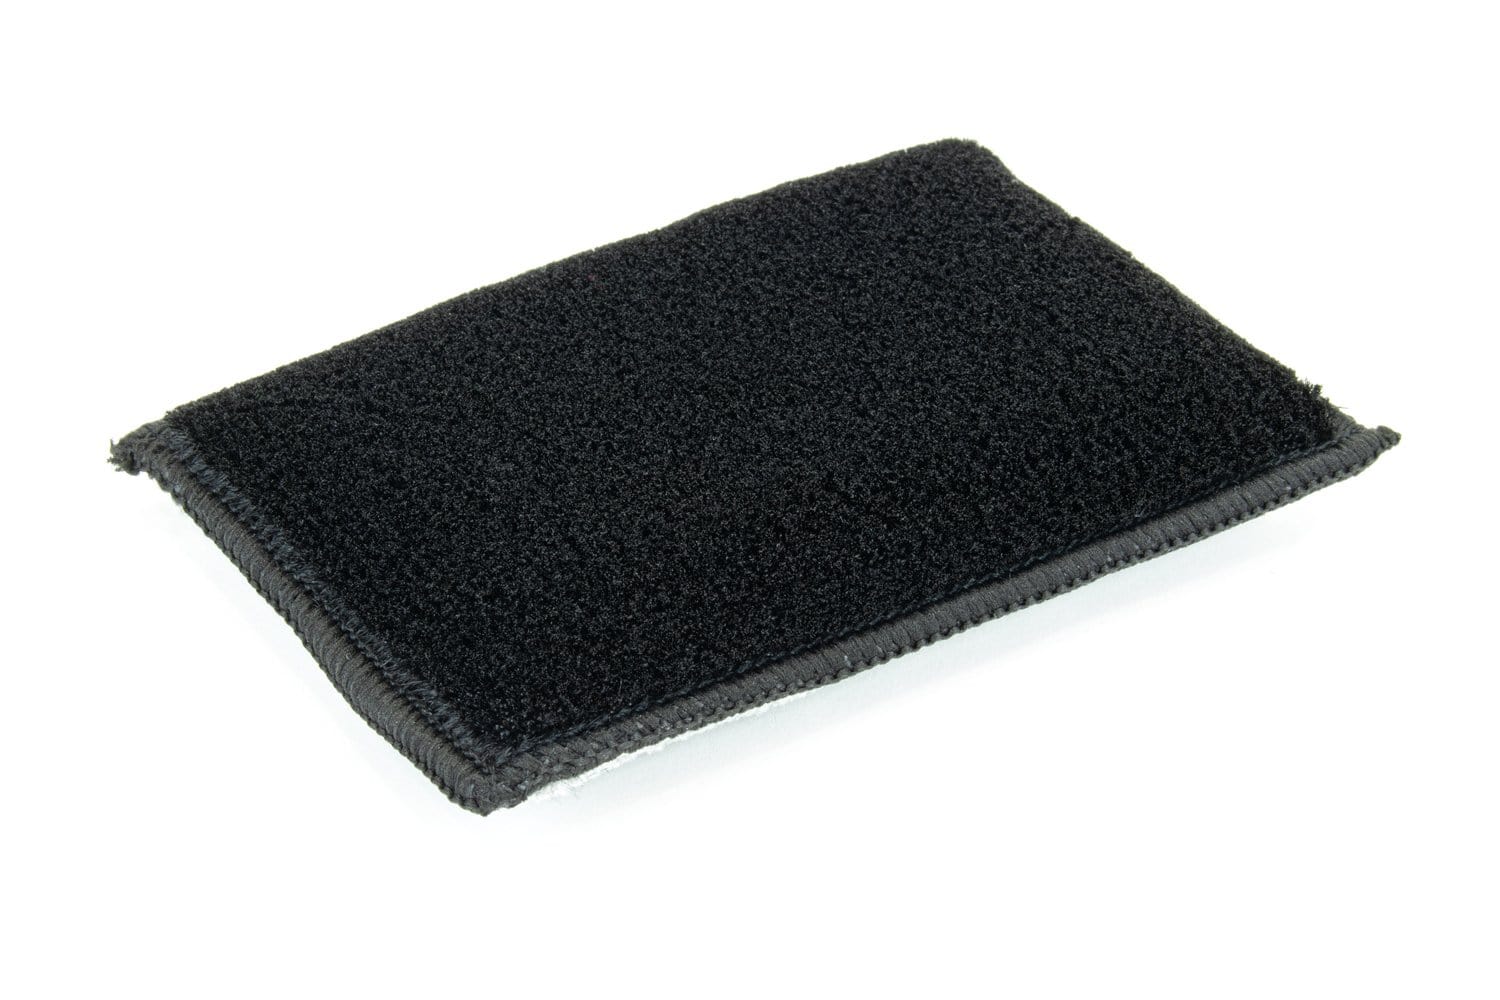  Autofiber Scrub Ninja - Interior Scrubbing Sponge (5”x3”) for  Leather, Plastic, Vinyl and Upholstery Cleaning (White/Gray) : Health &  Household